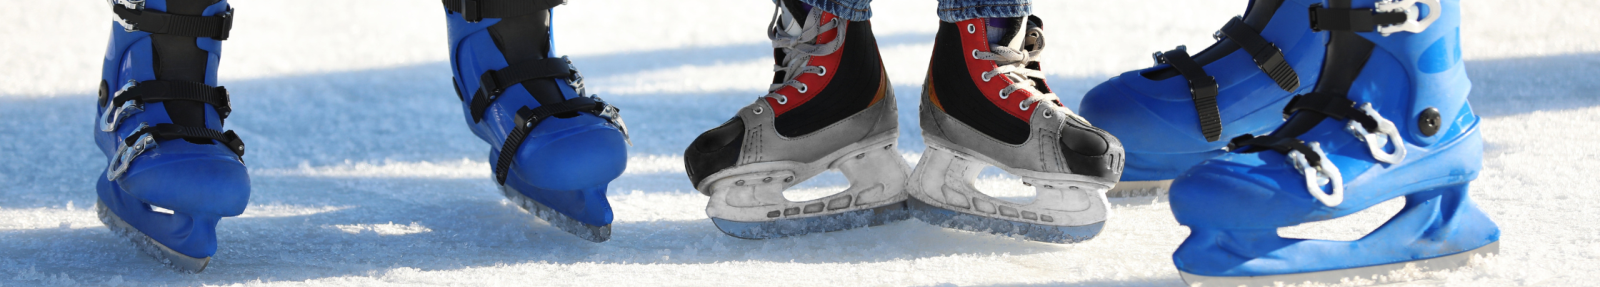 ice skates close up on ice outdoors